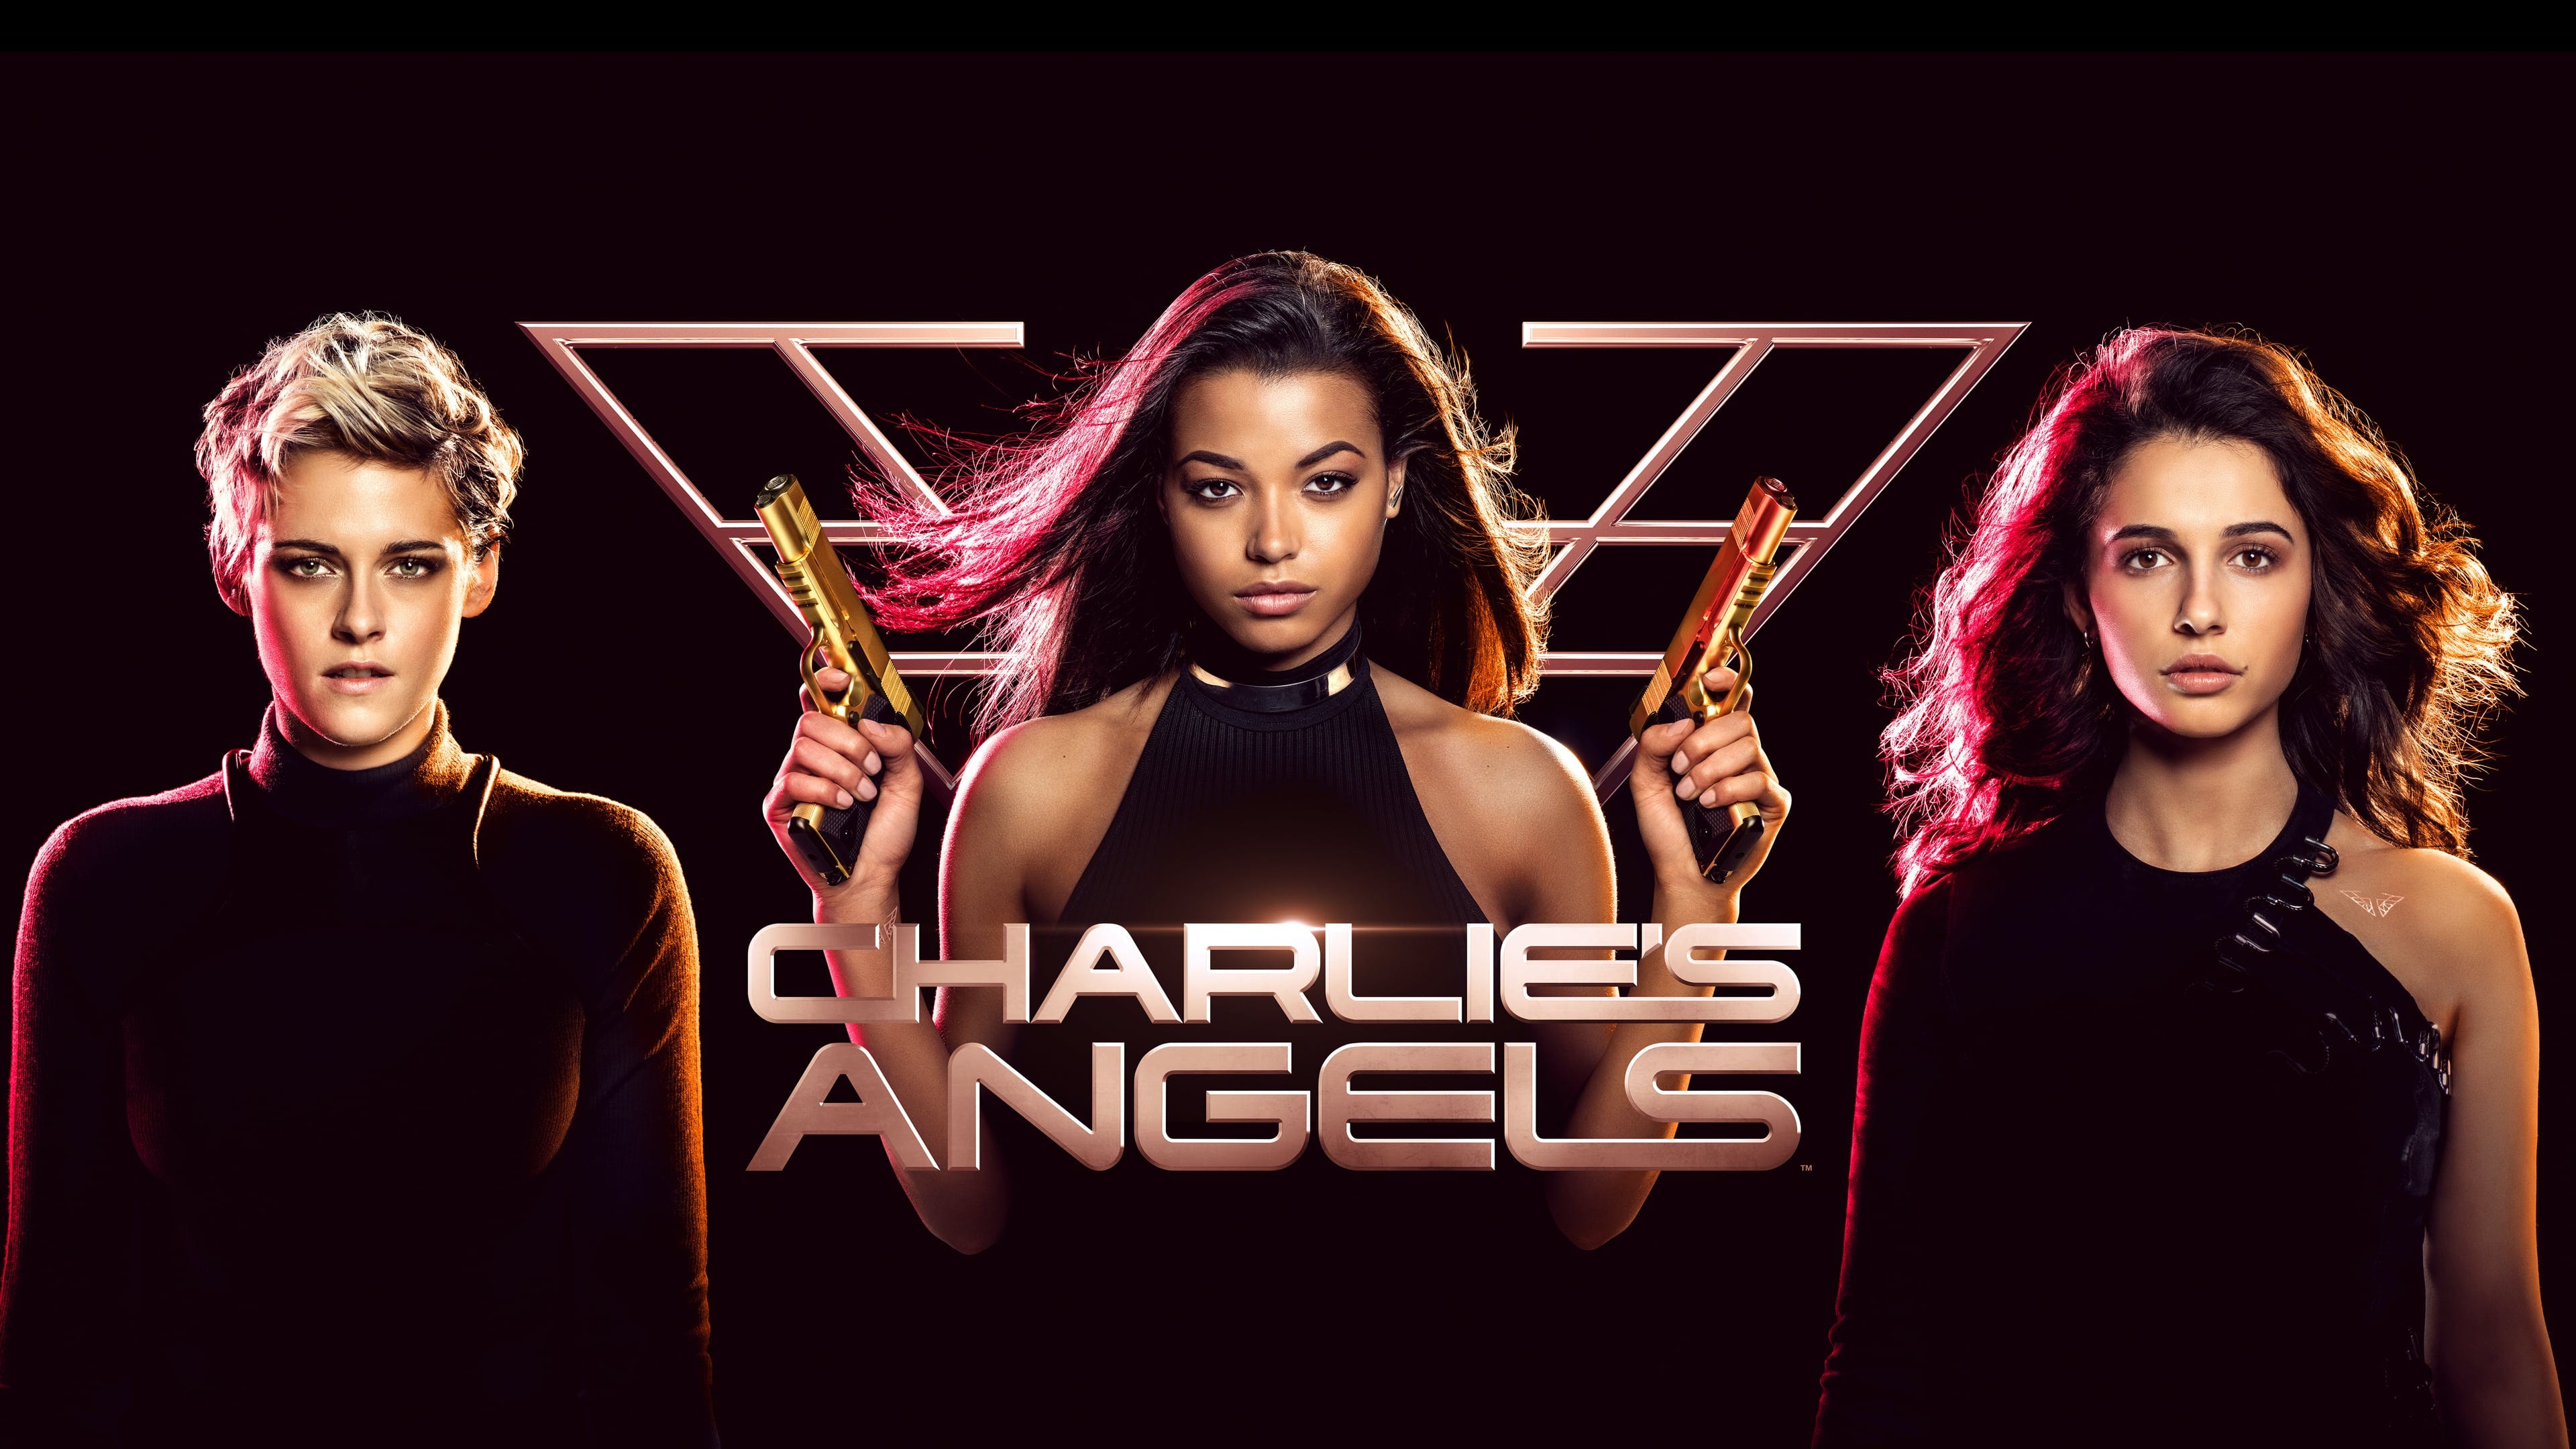 Srv2 Master Movies Com Charlie S Angels 2019 Download Gratis By Keyla S Batangdeui Medium